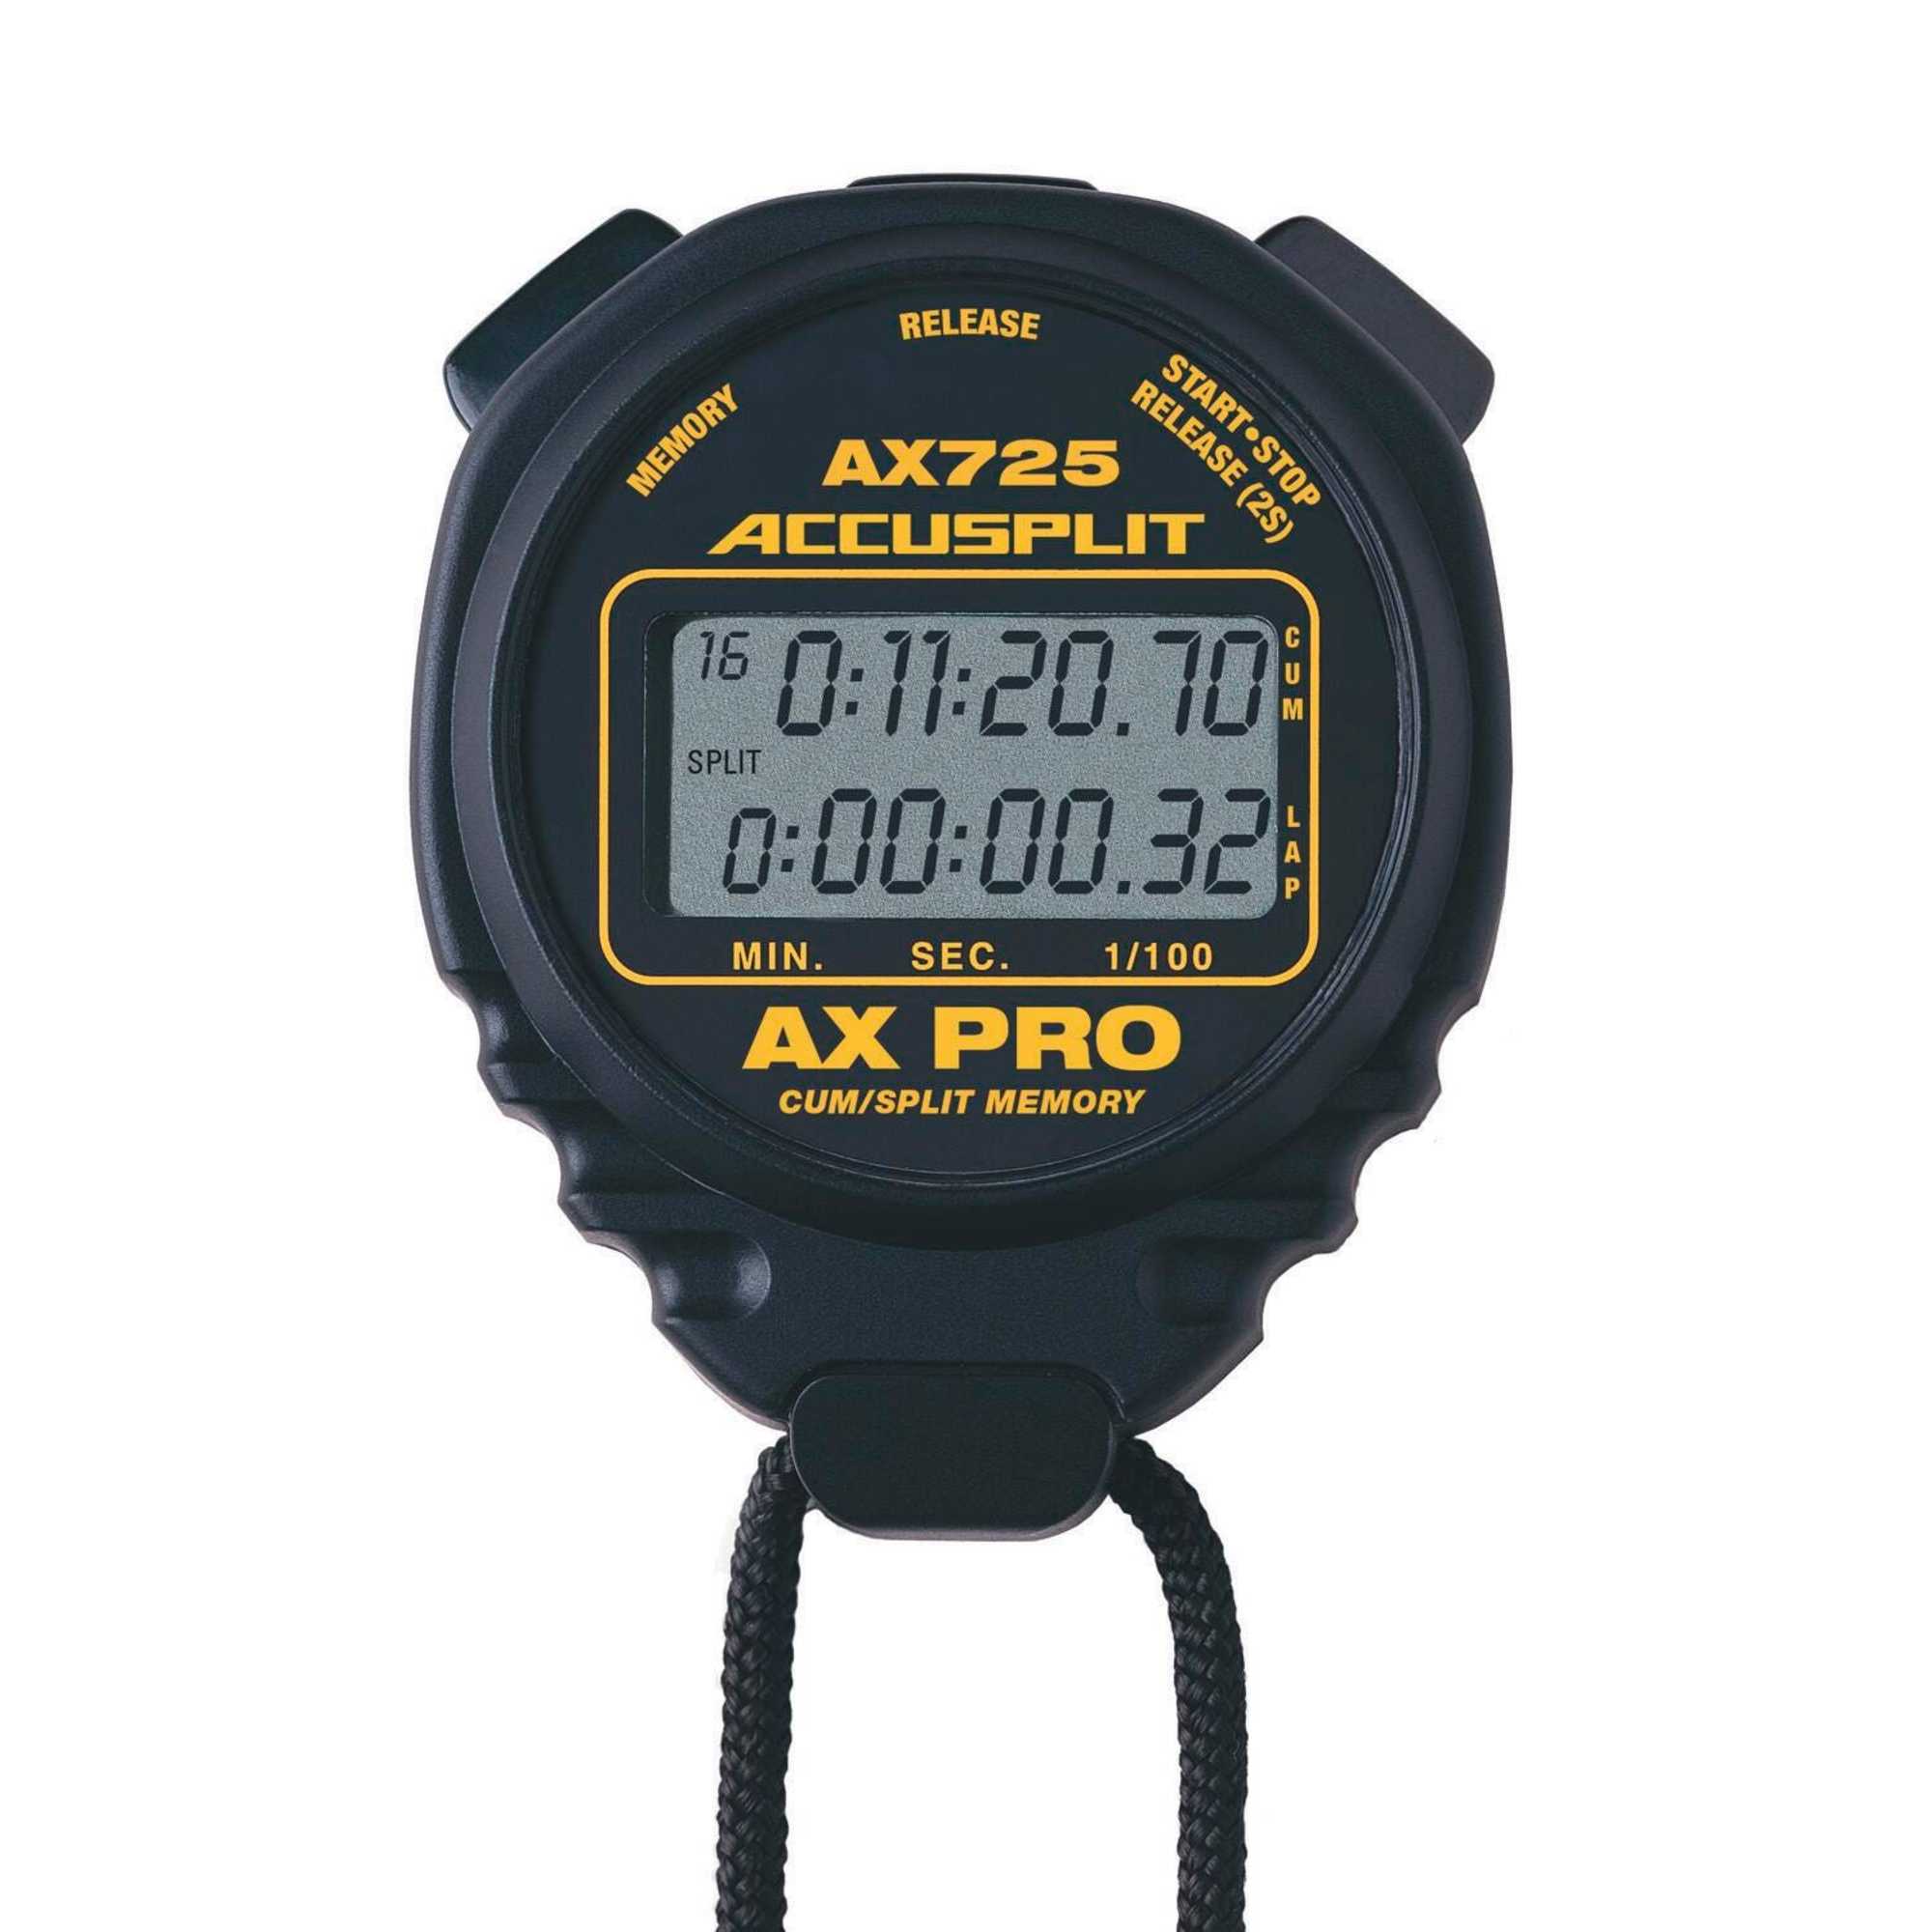 Accusplit AX725 Series Stopwatch, Black - image 1 of 2